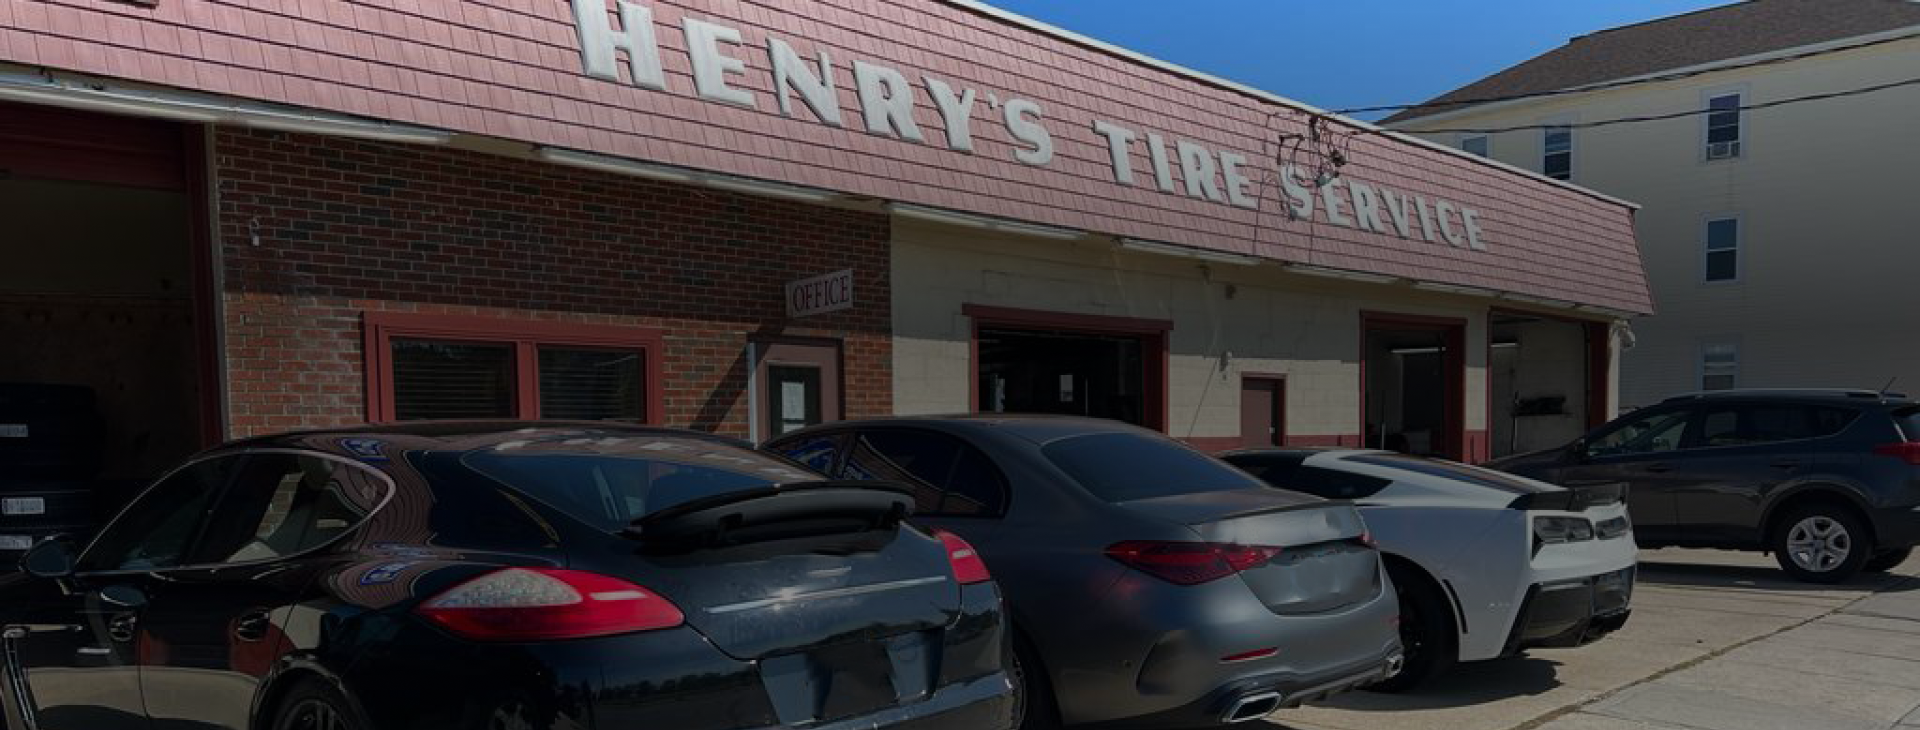 Henry's Tire Service & Auto Repair - Fall River Auto Repair